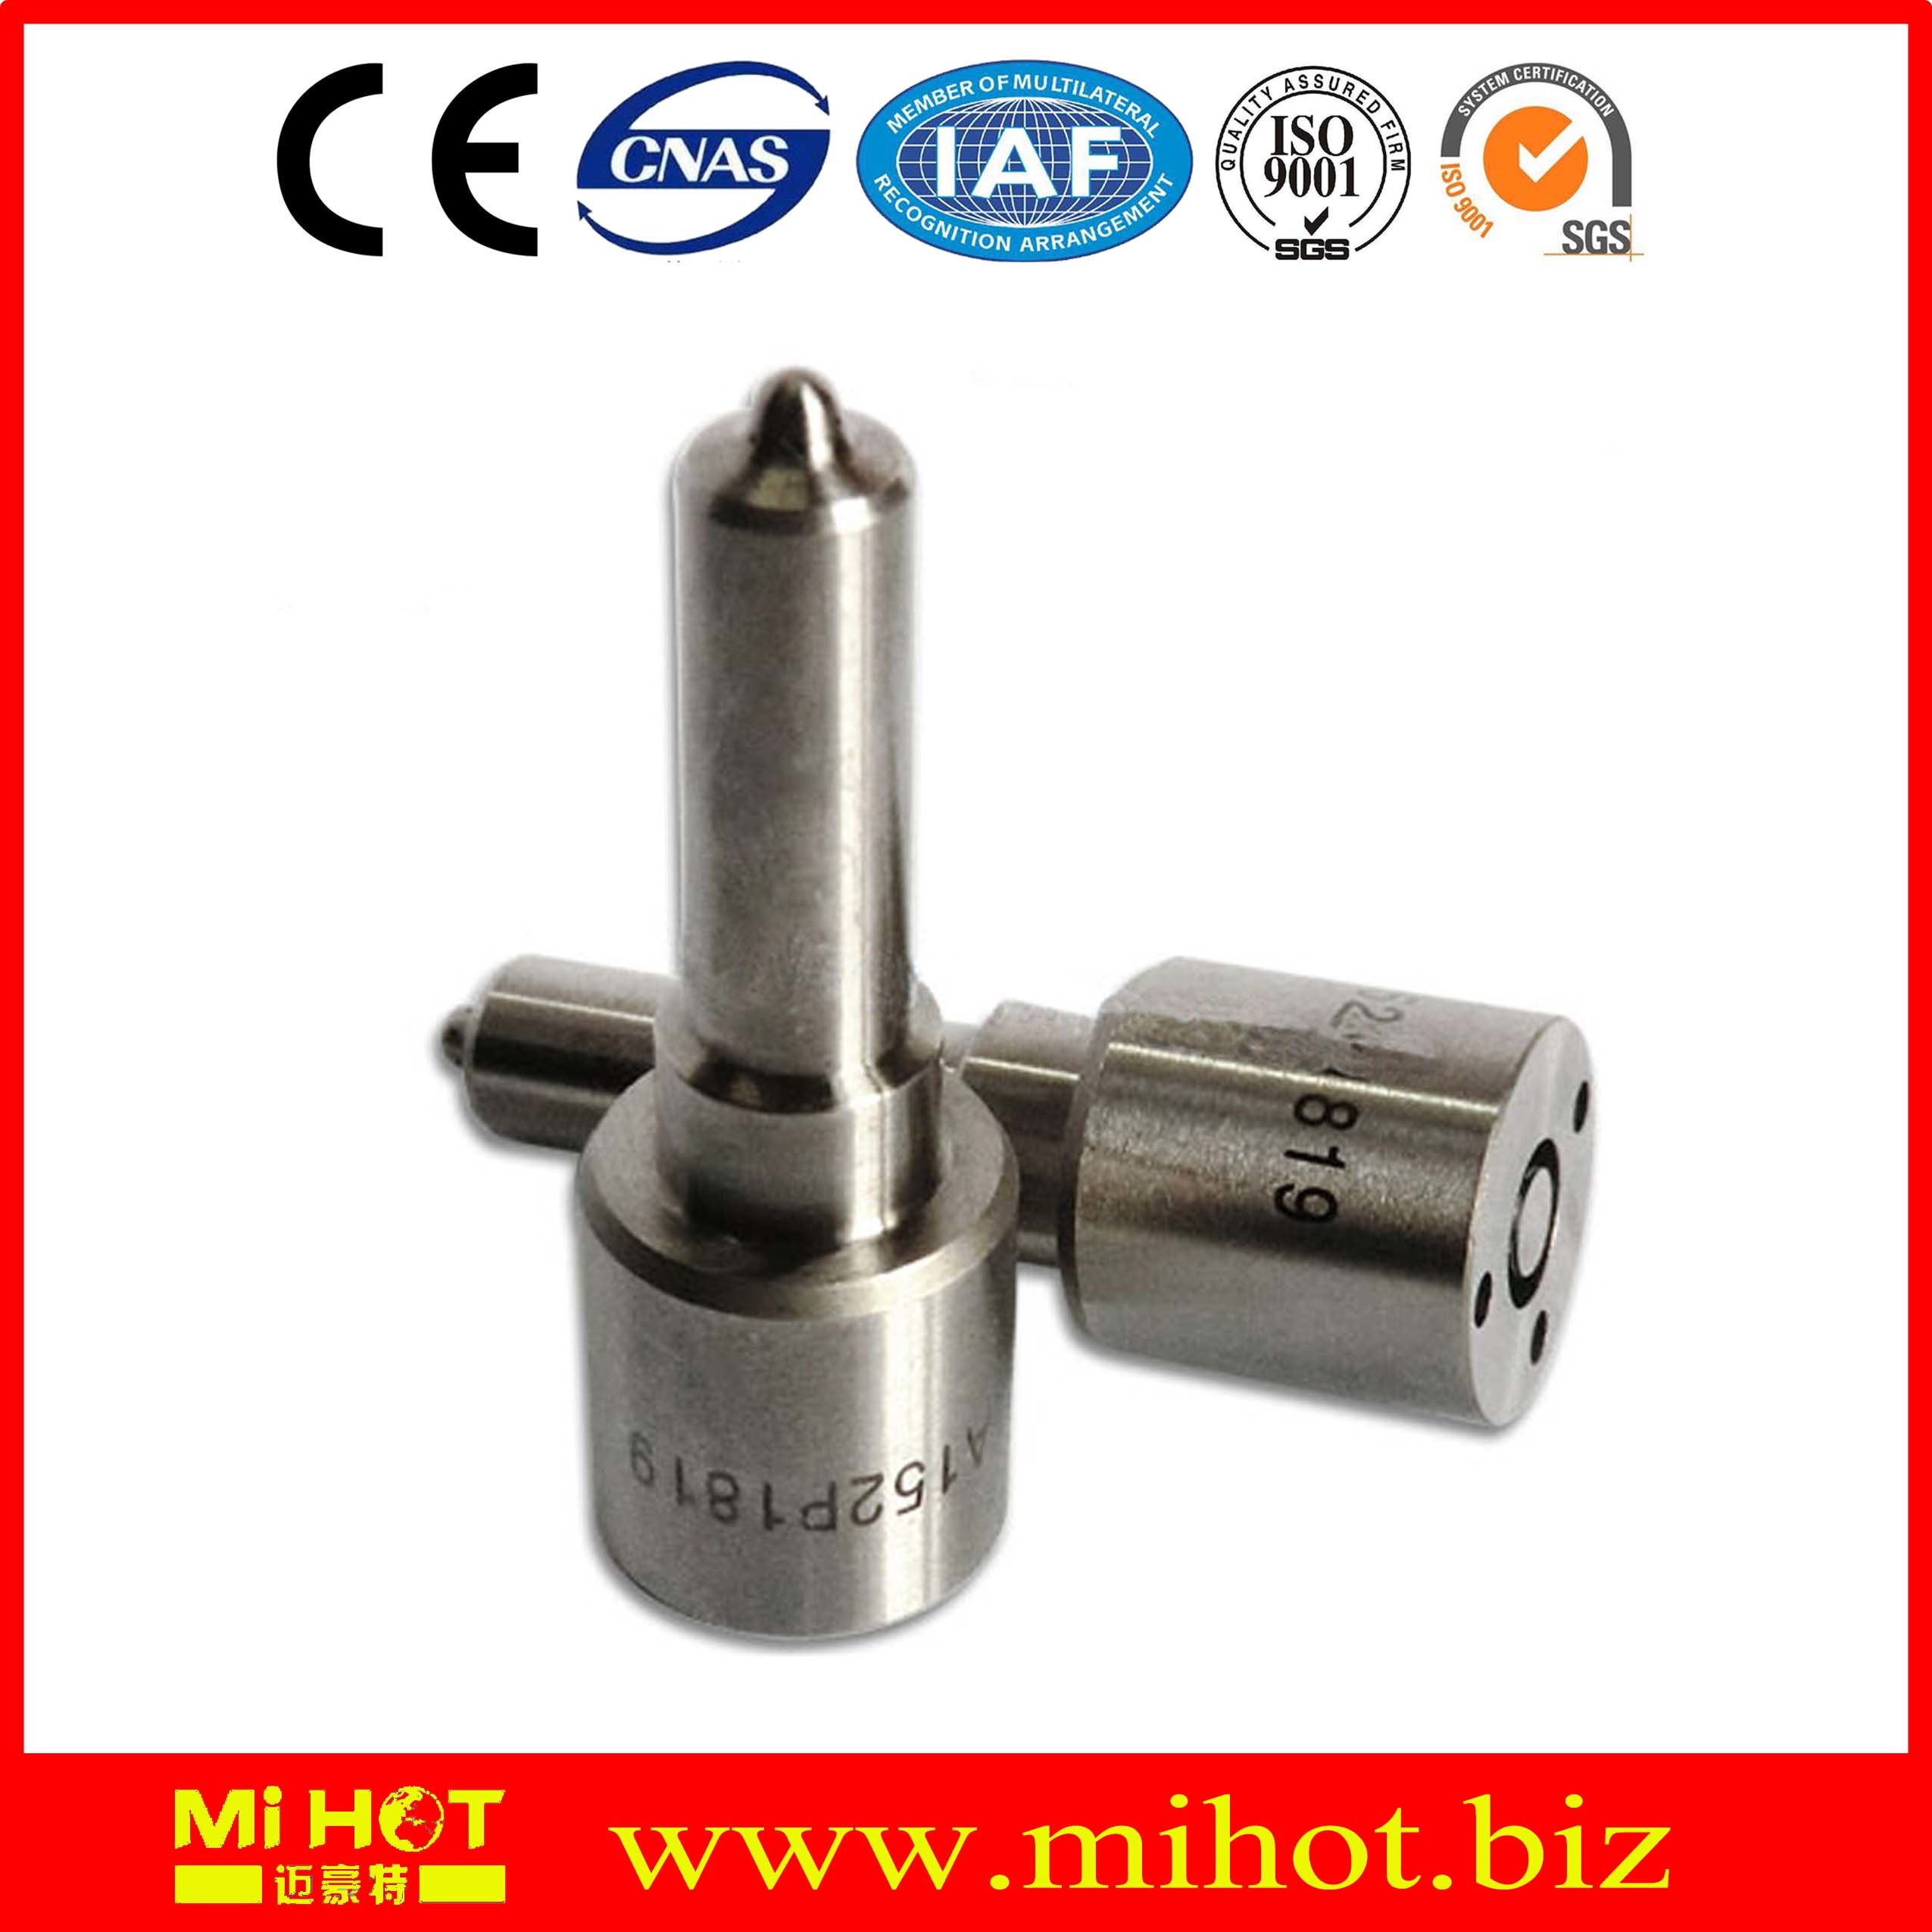 Fuel Nozzle Dlla150p1052 for Common Rail Injector Use